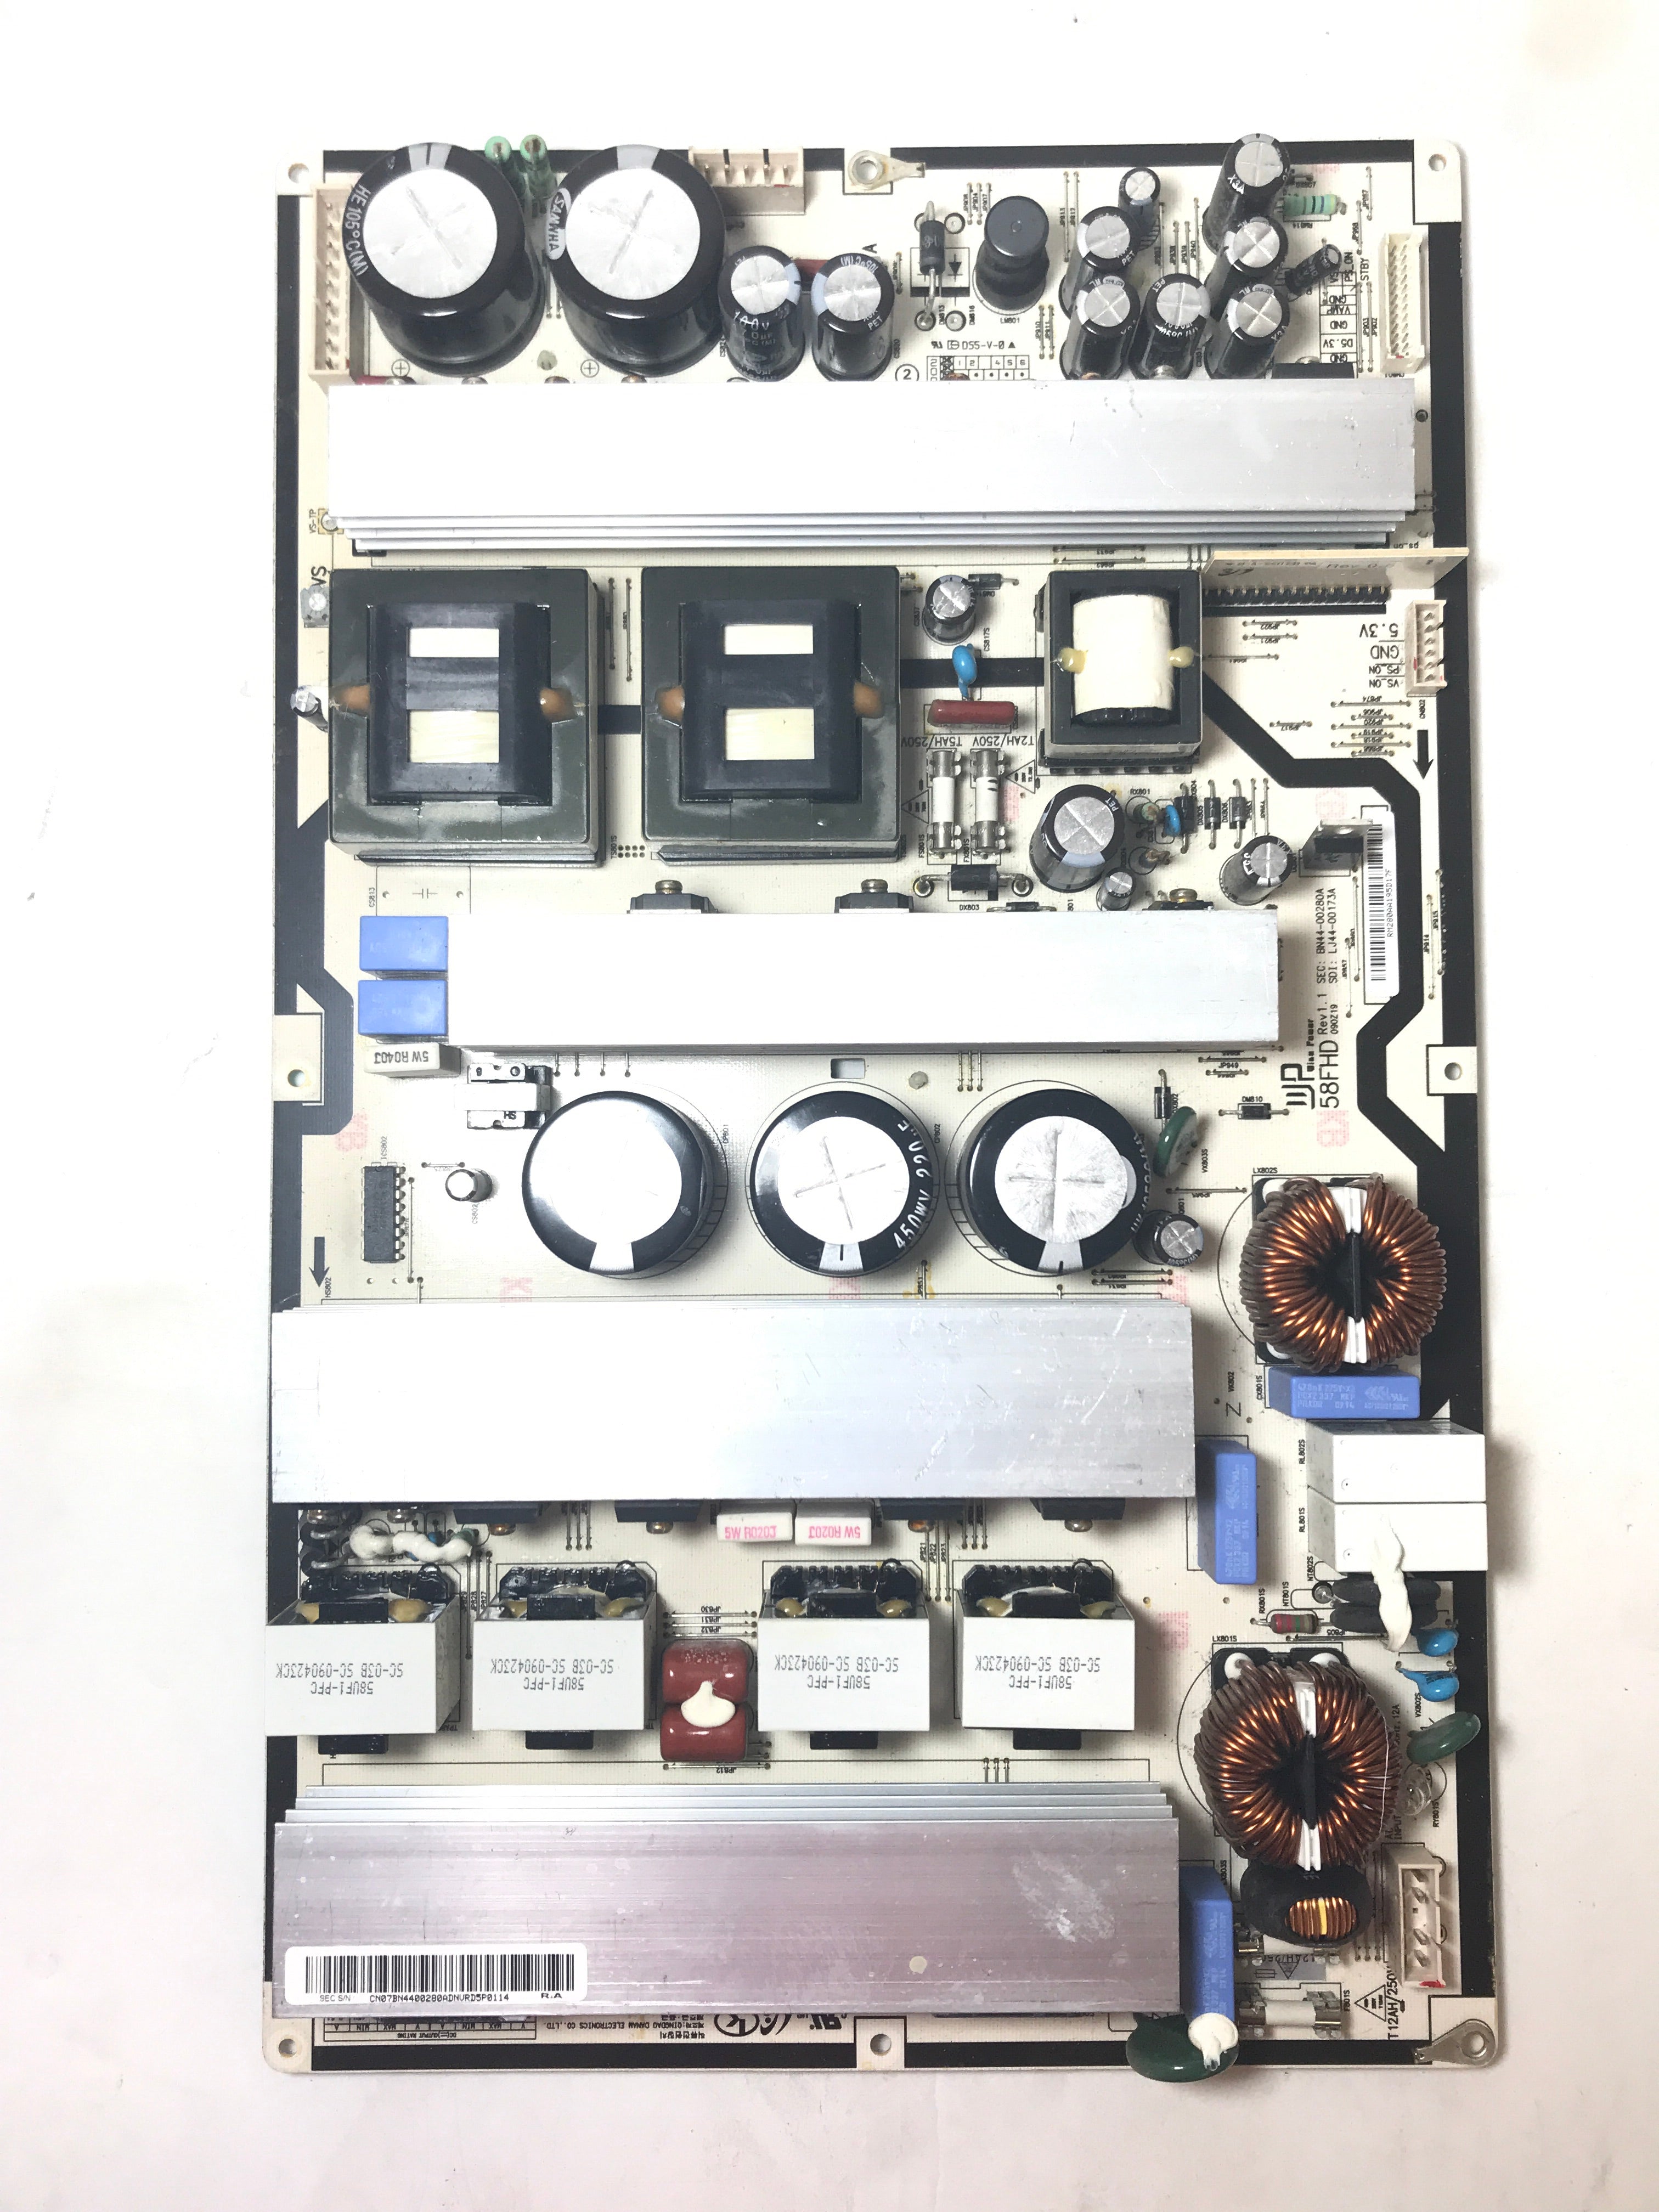 Samsung BN44-00280A (LJ44-00173A) Power Supply Unit